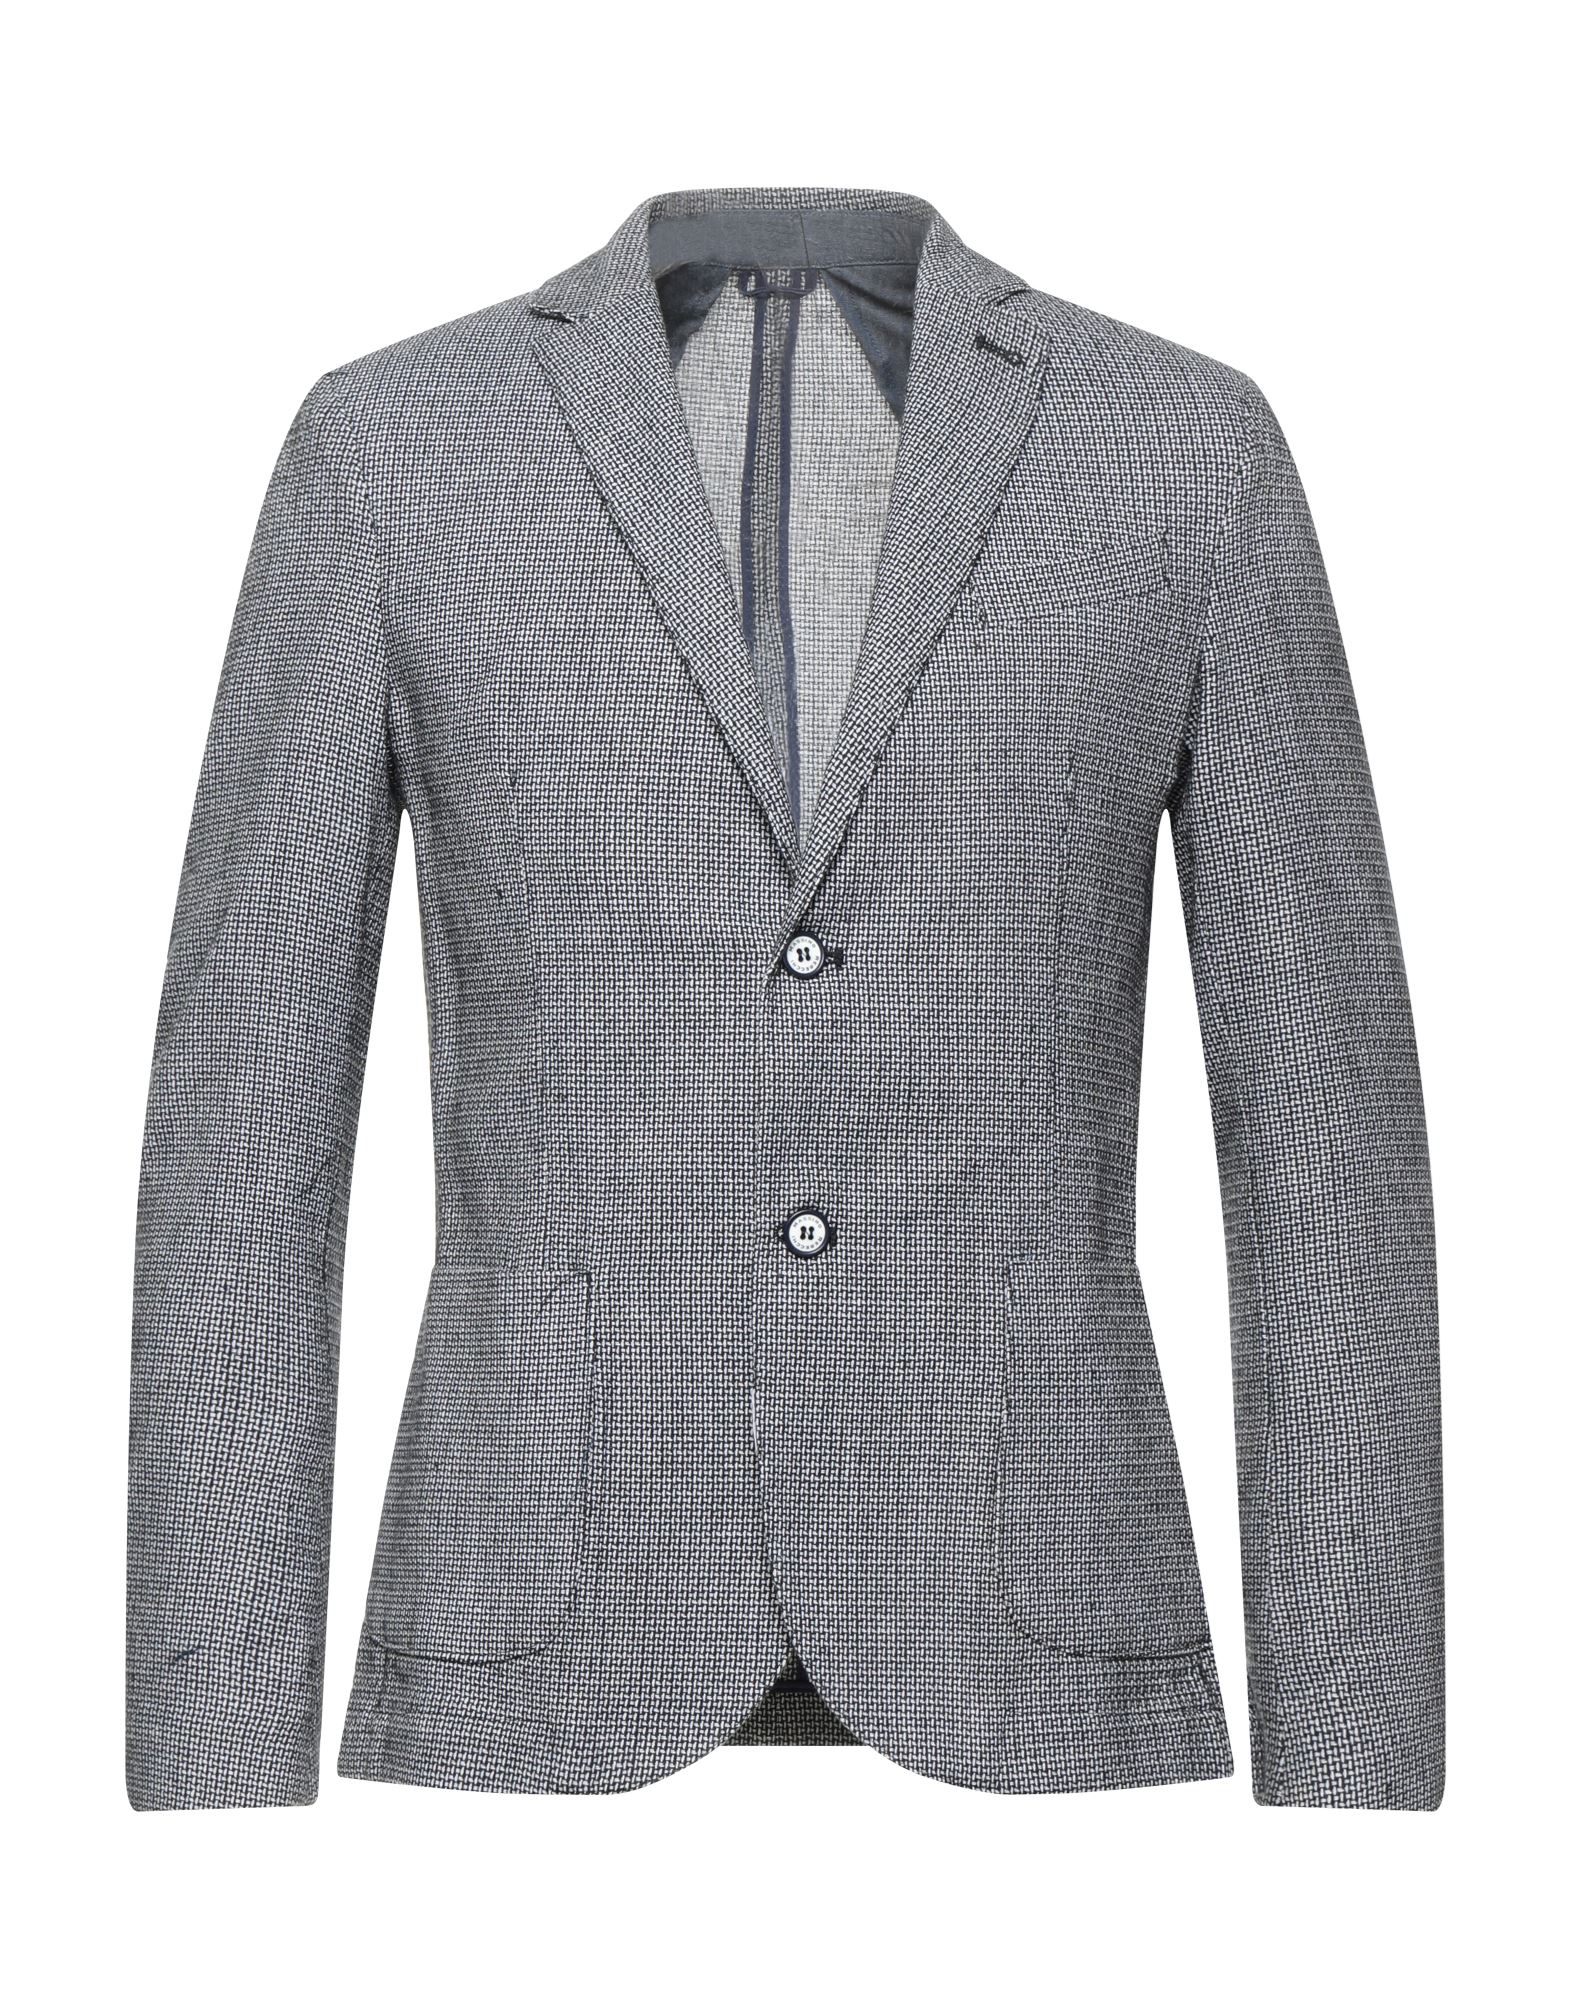 MR MASSIMO REBECCHI Suit jackets